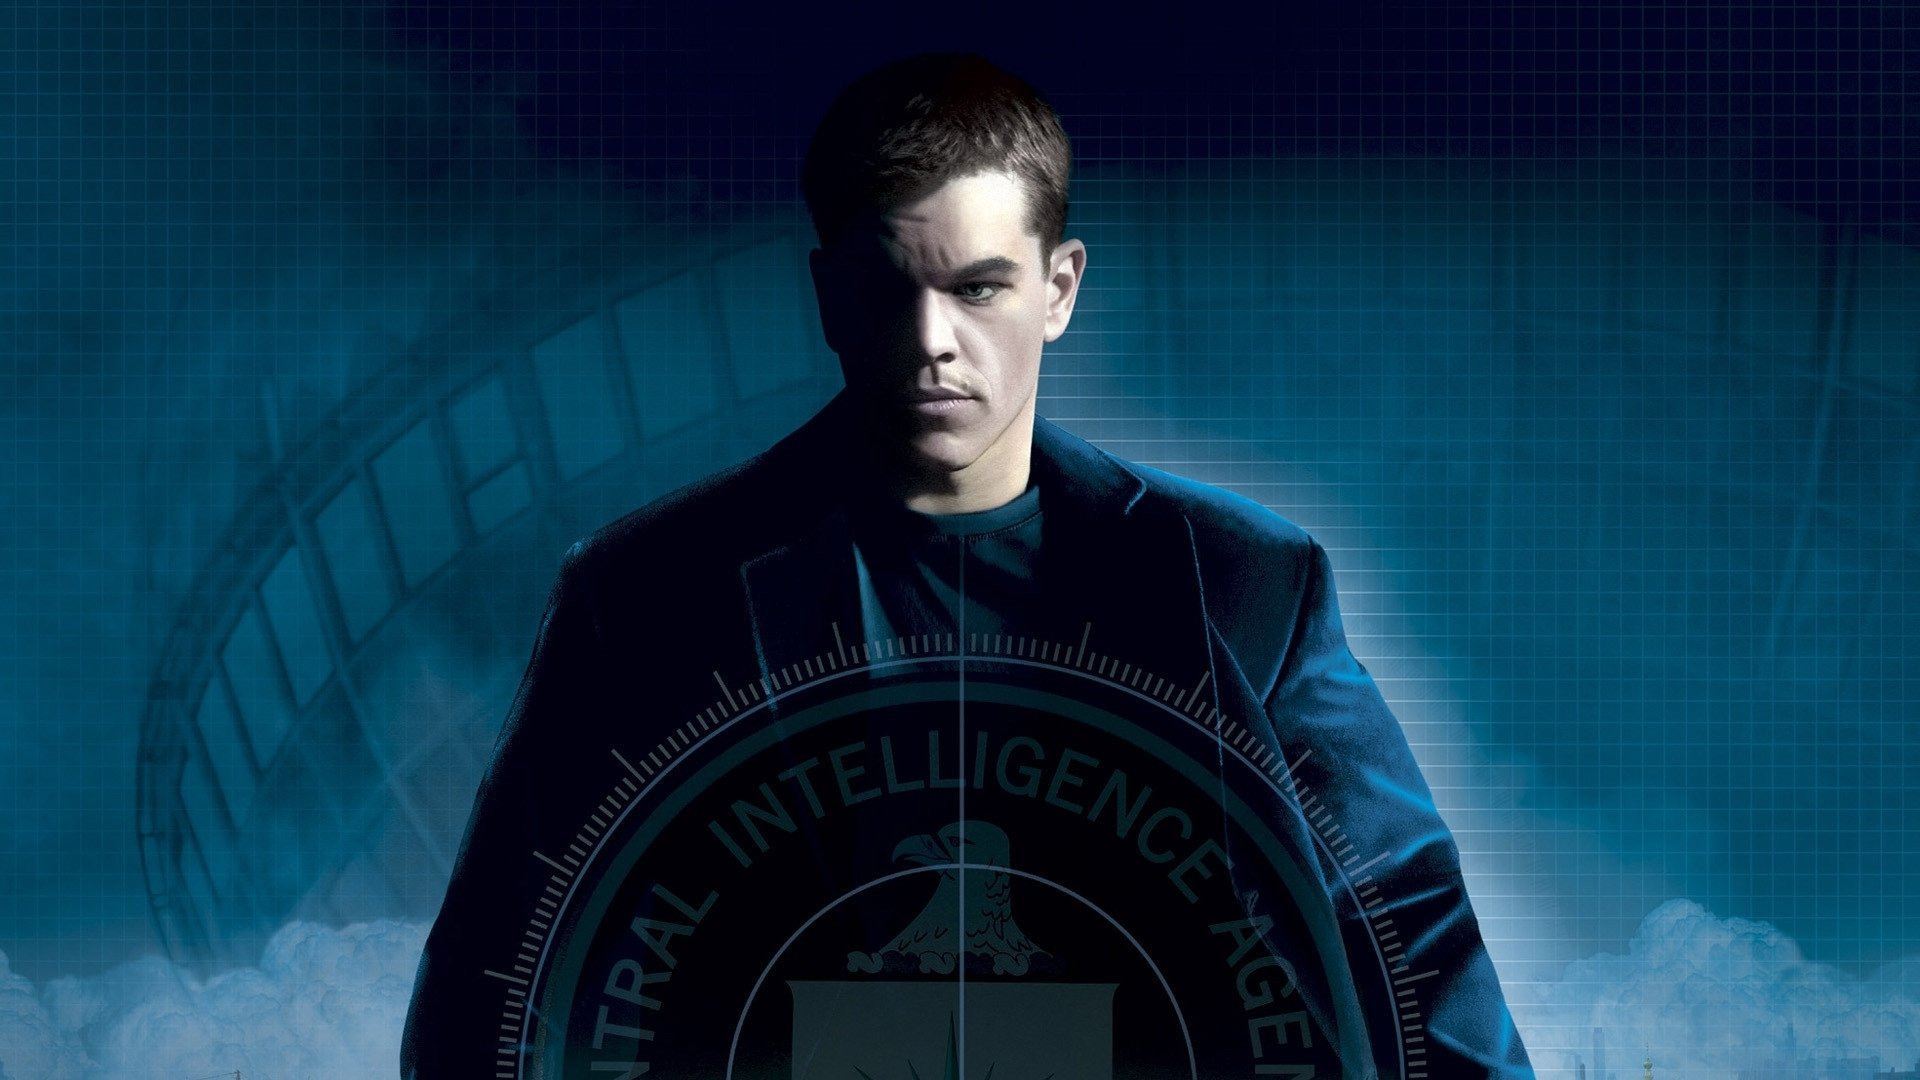 Bourne ultimatum wallpaper